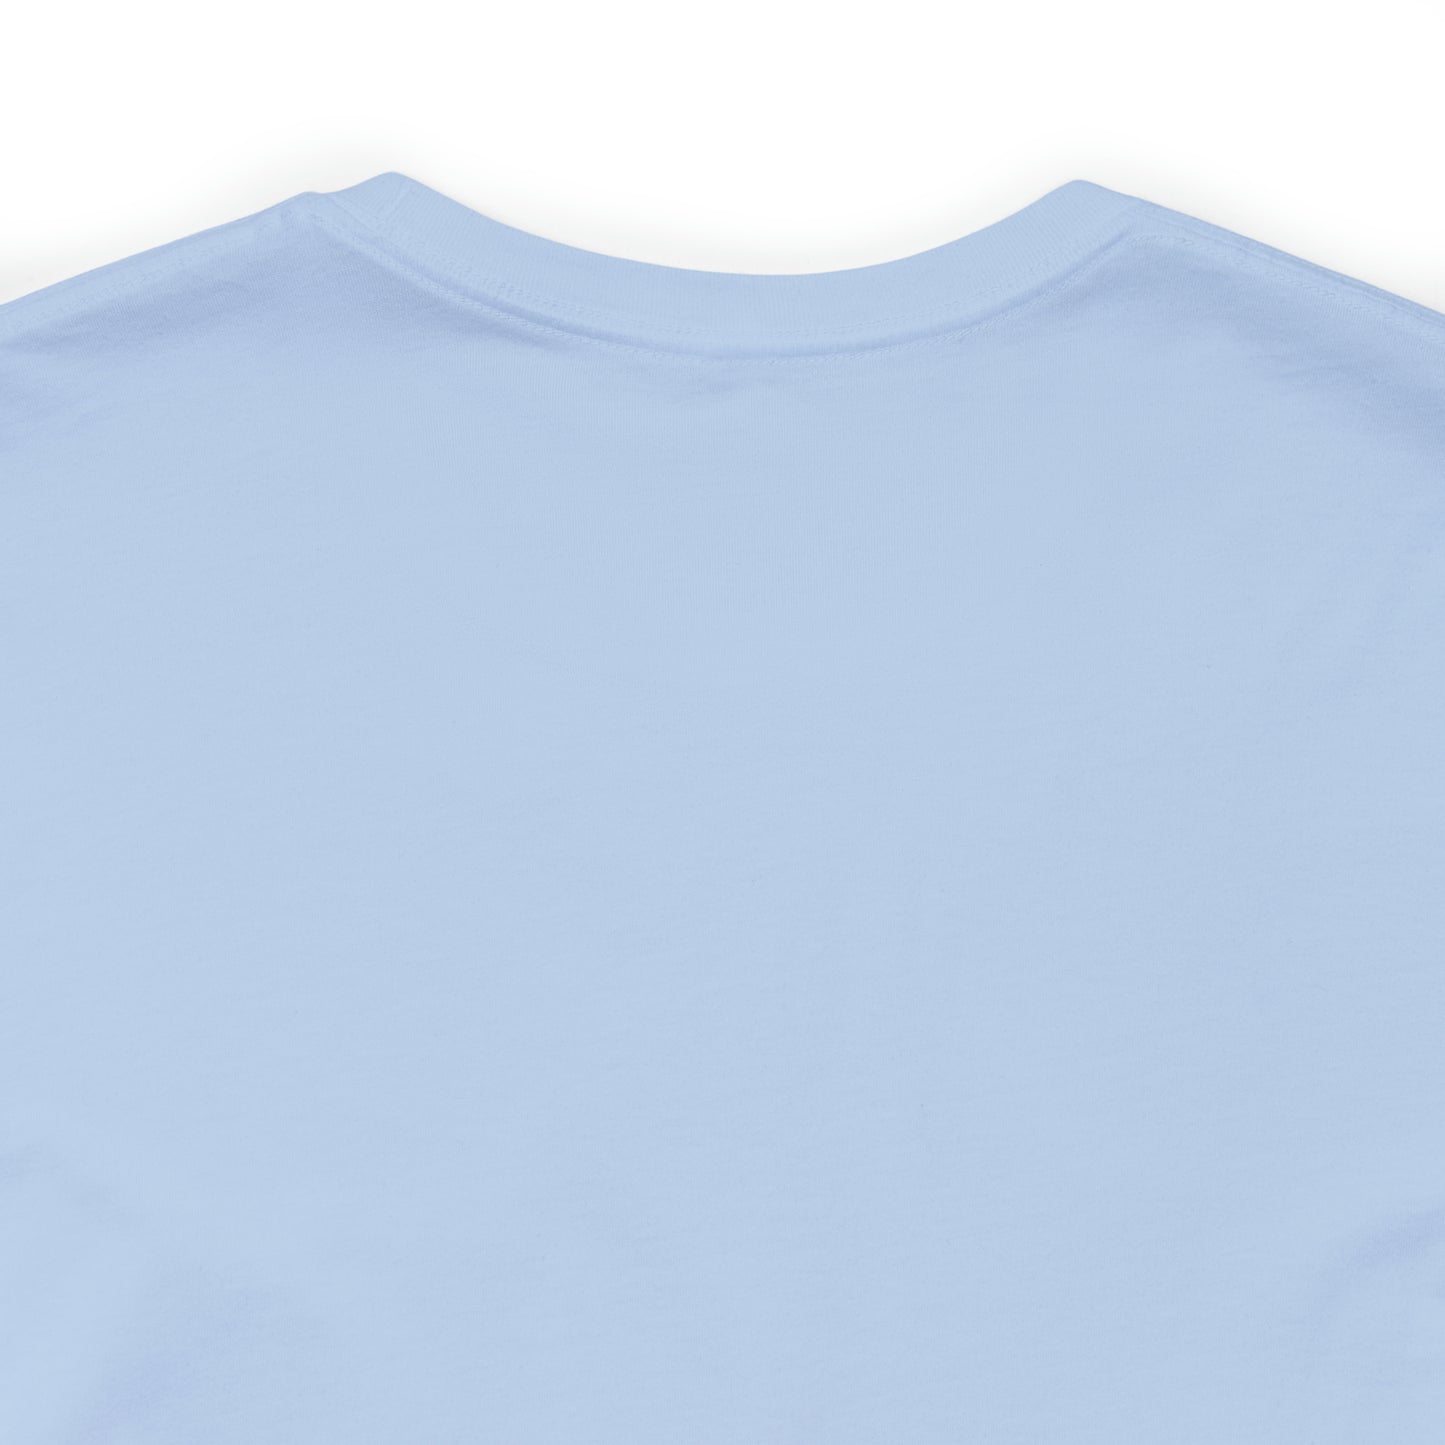 KAPTUR Unisex Short Sleeve T-Shirt